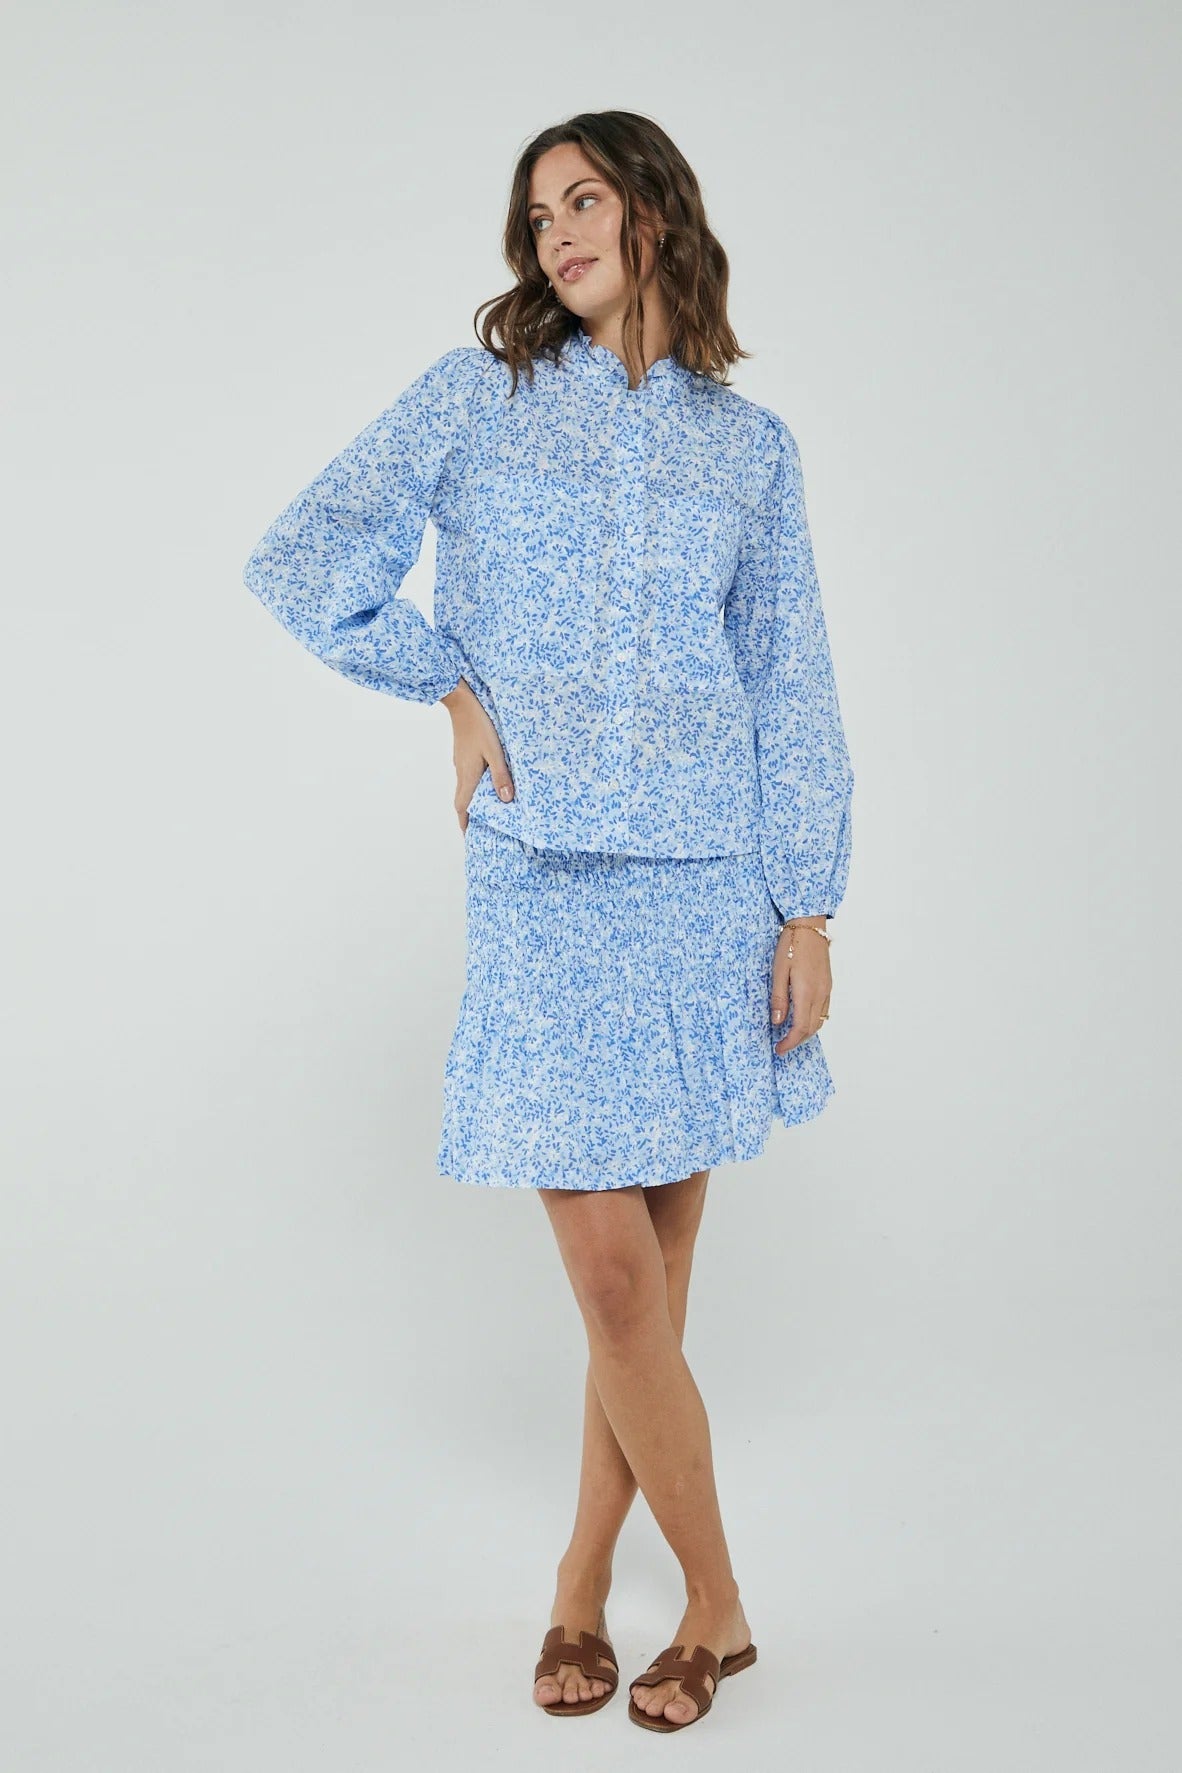 Chrystal skirt Blue Printed